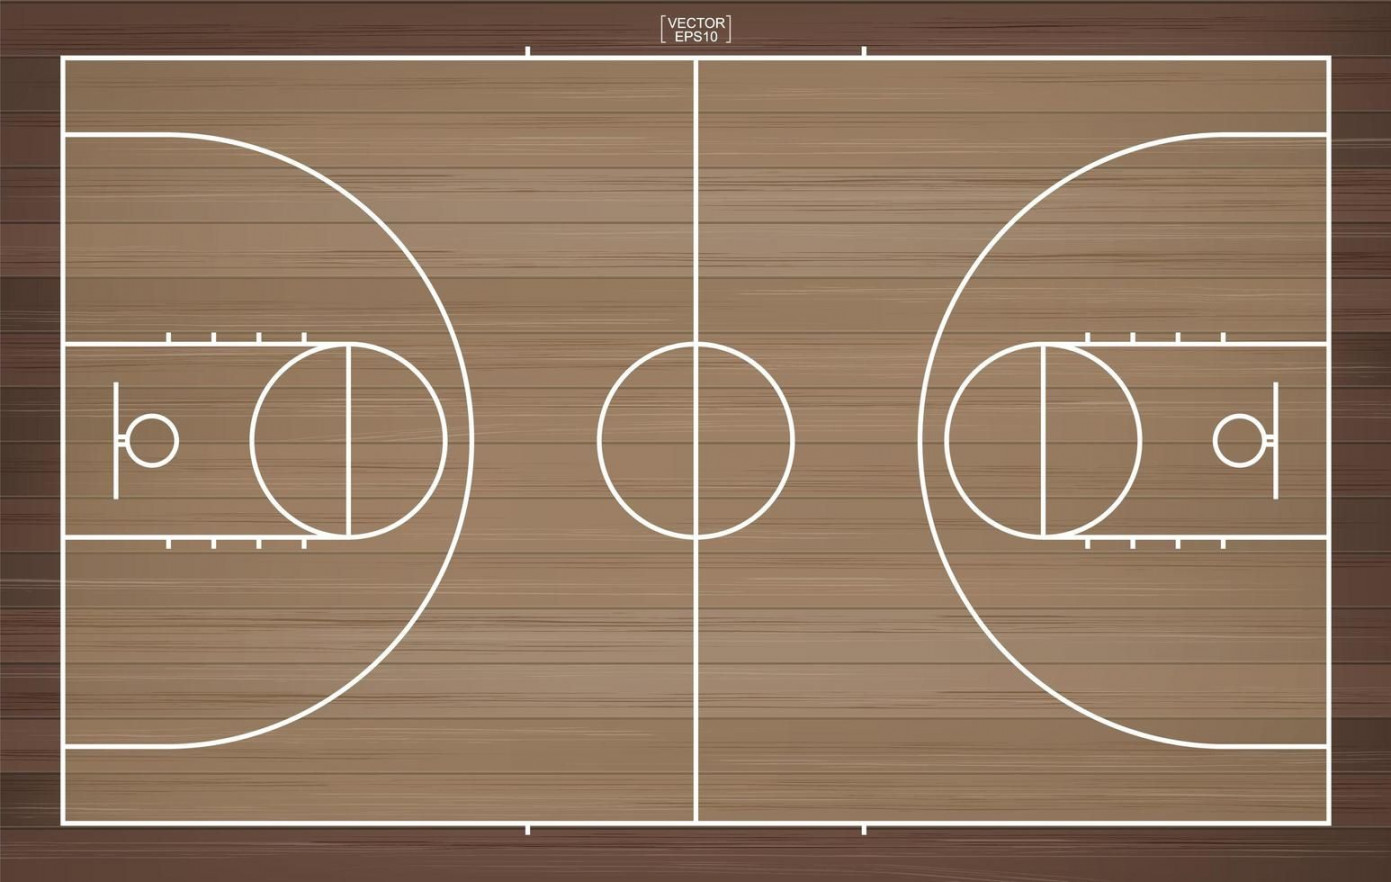 Top down view of basketball court  Basketball court, Basketball